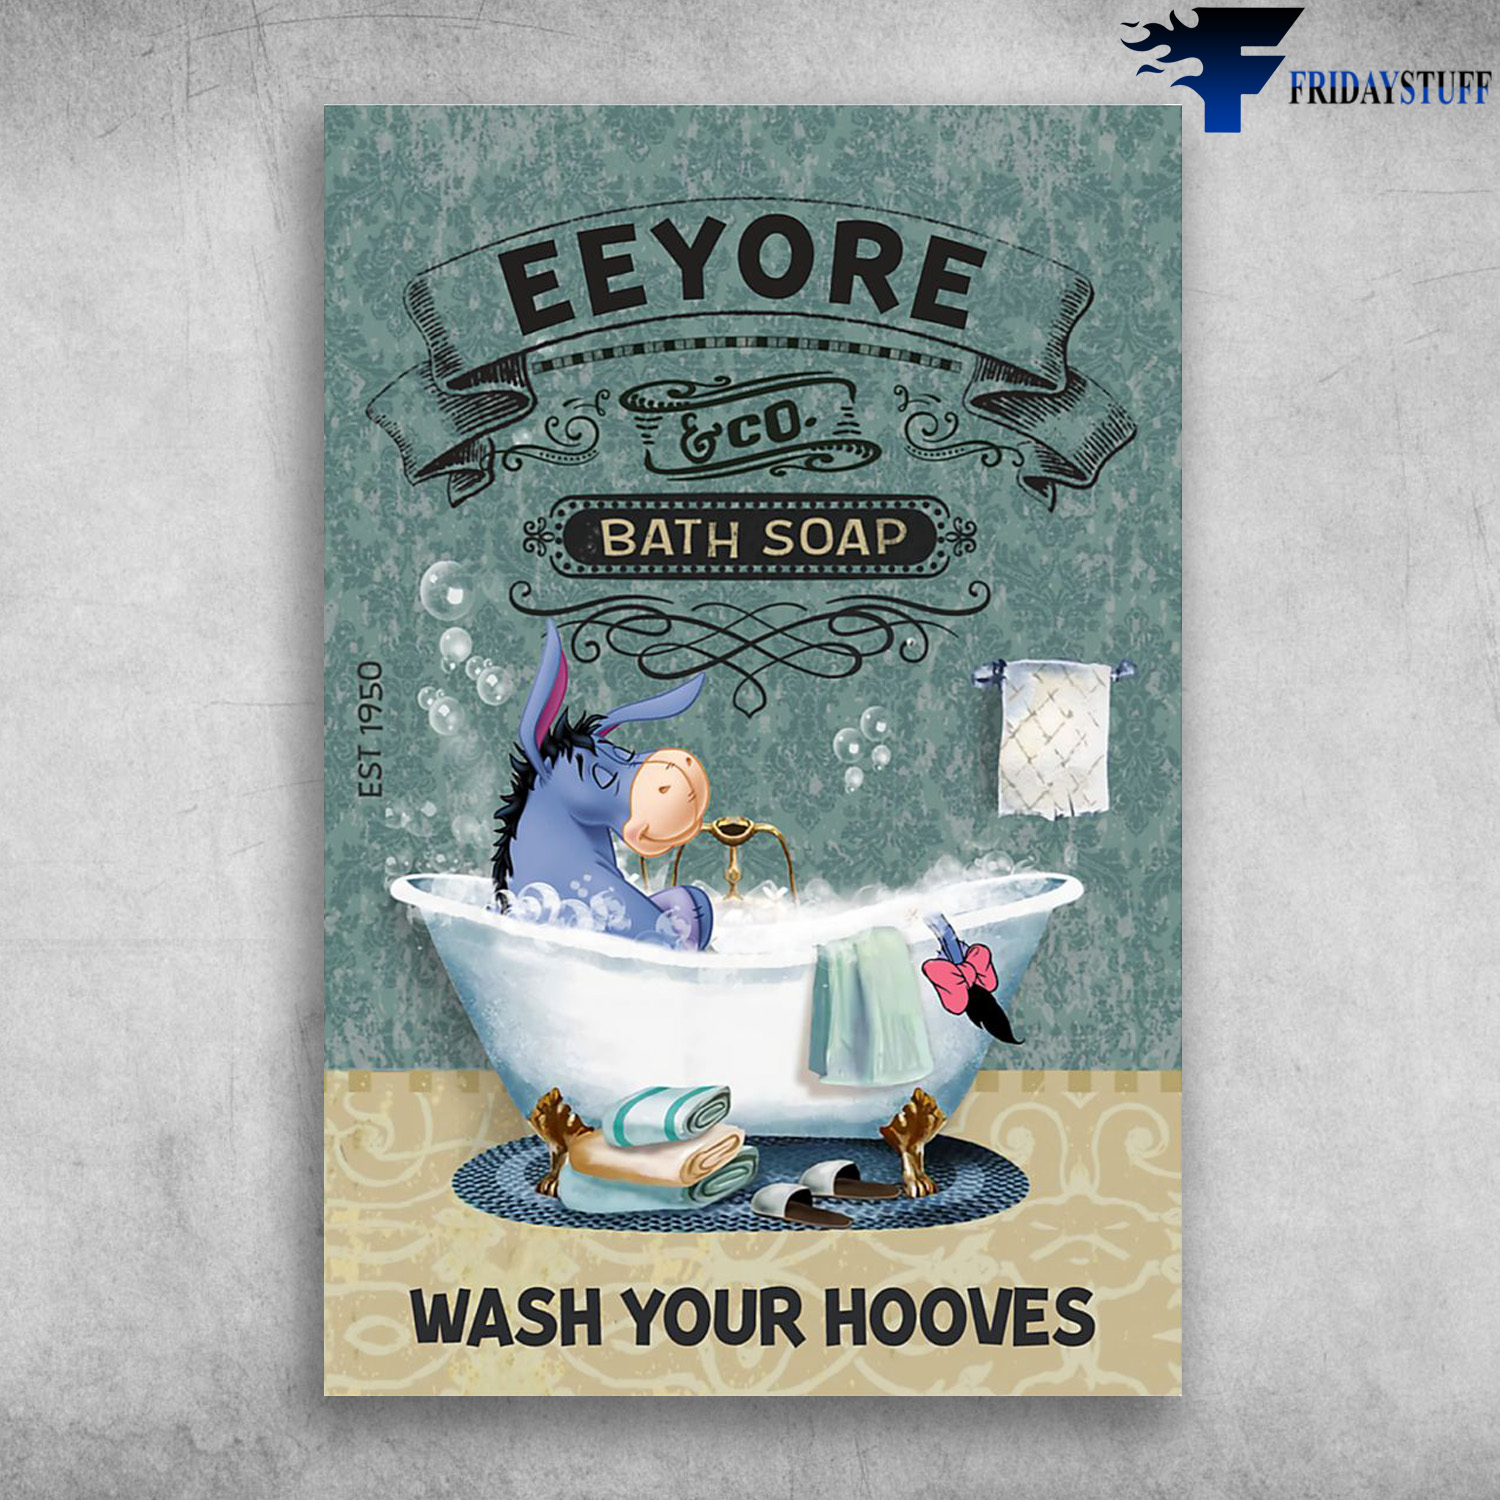 Eeyore In Bath Soap - Eeyore And Co. Bath Soap , EST 1950, Wash Your Hooves